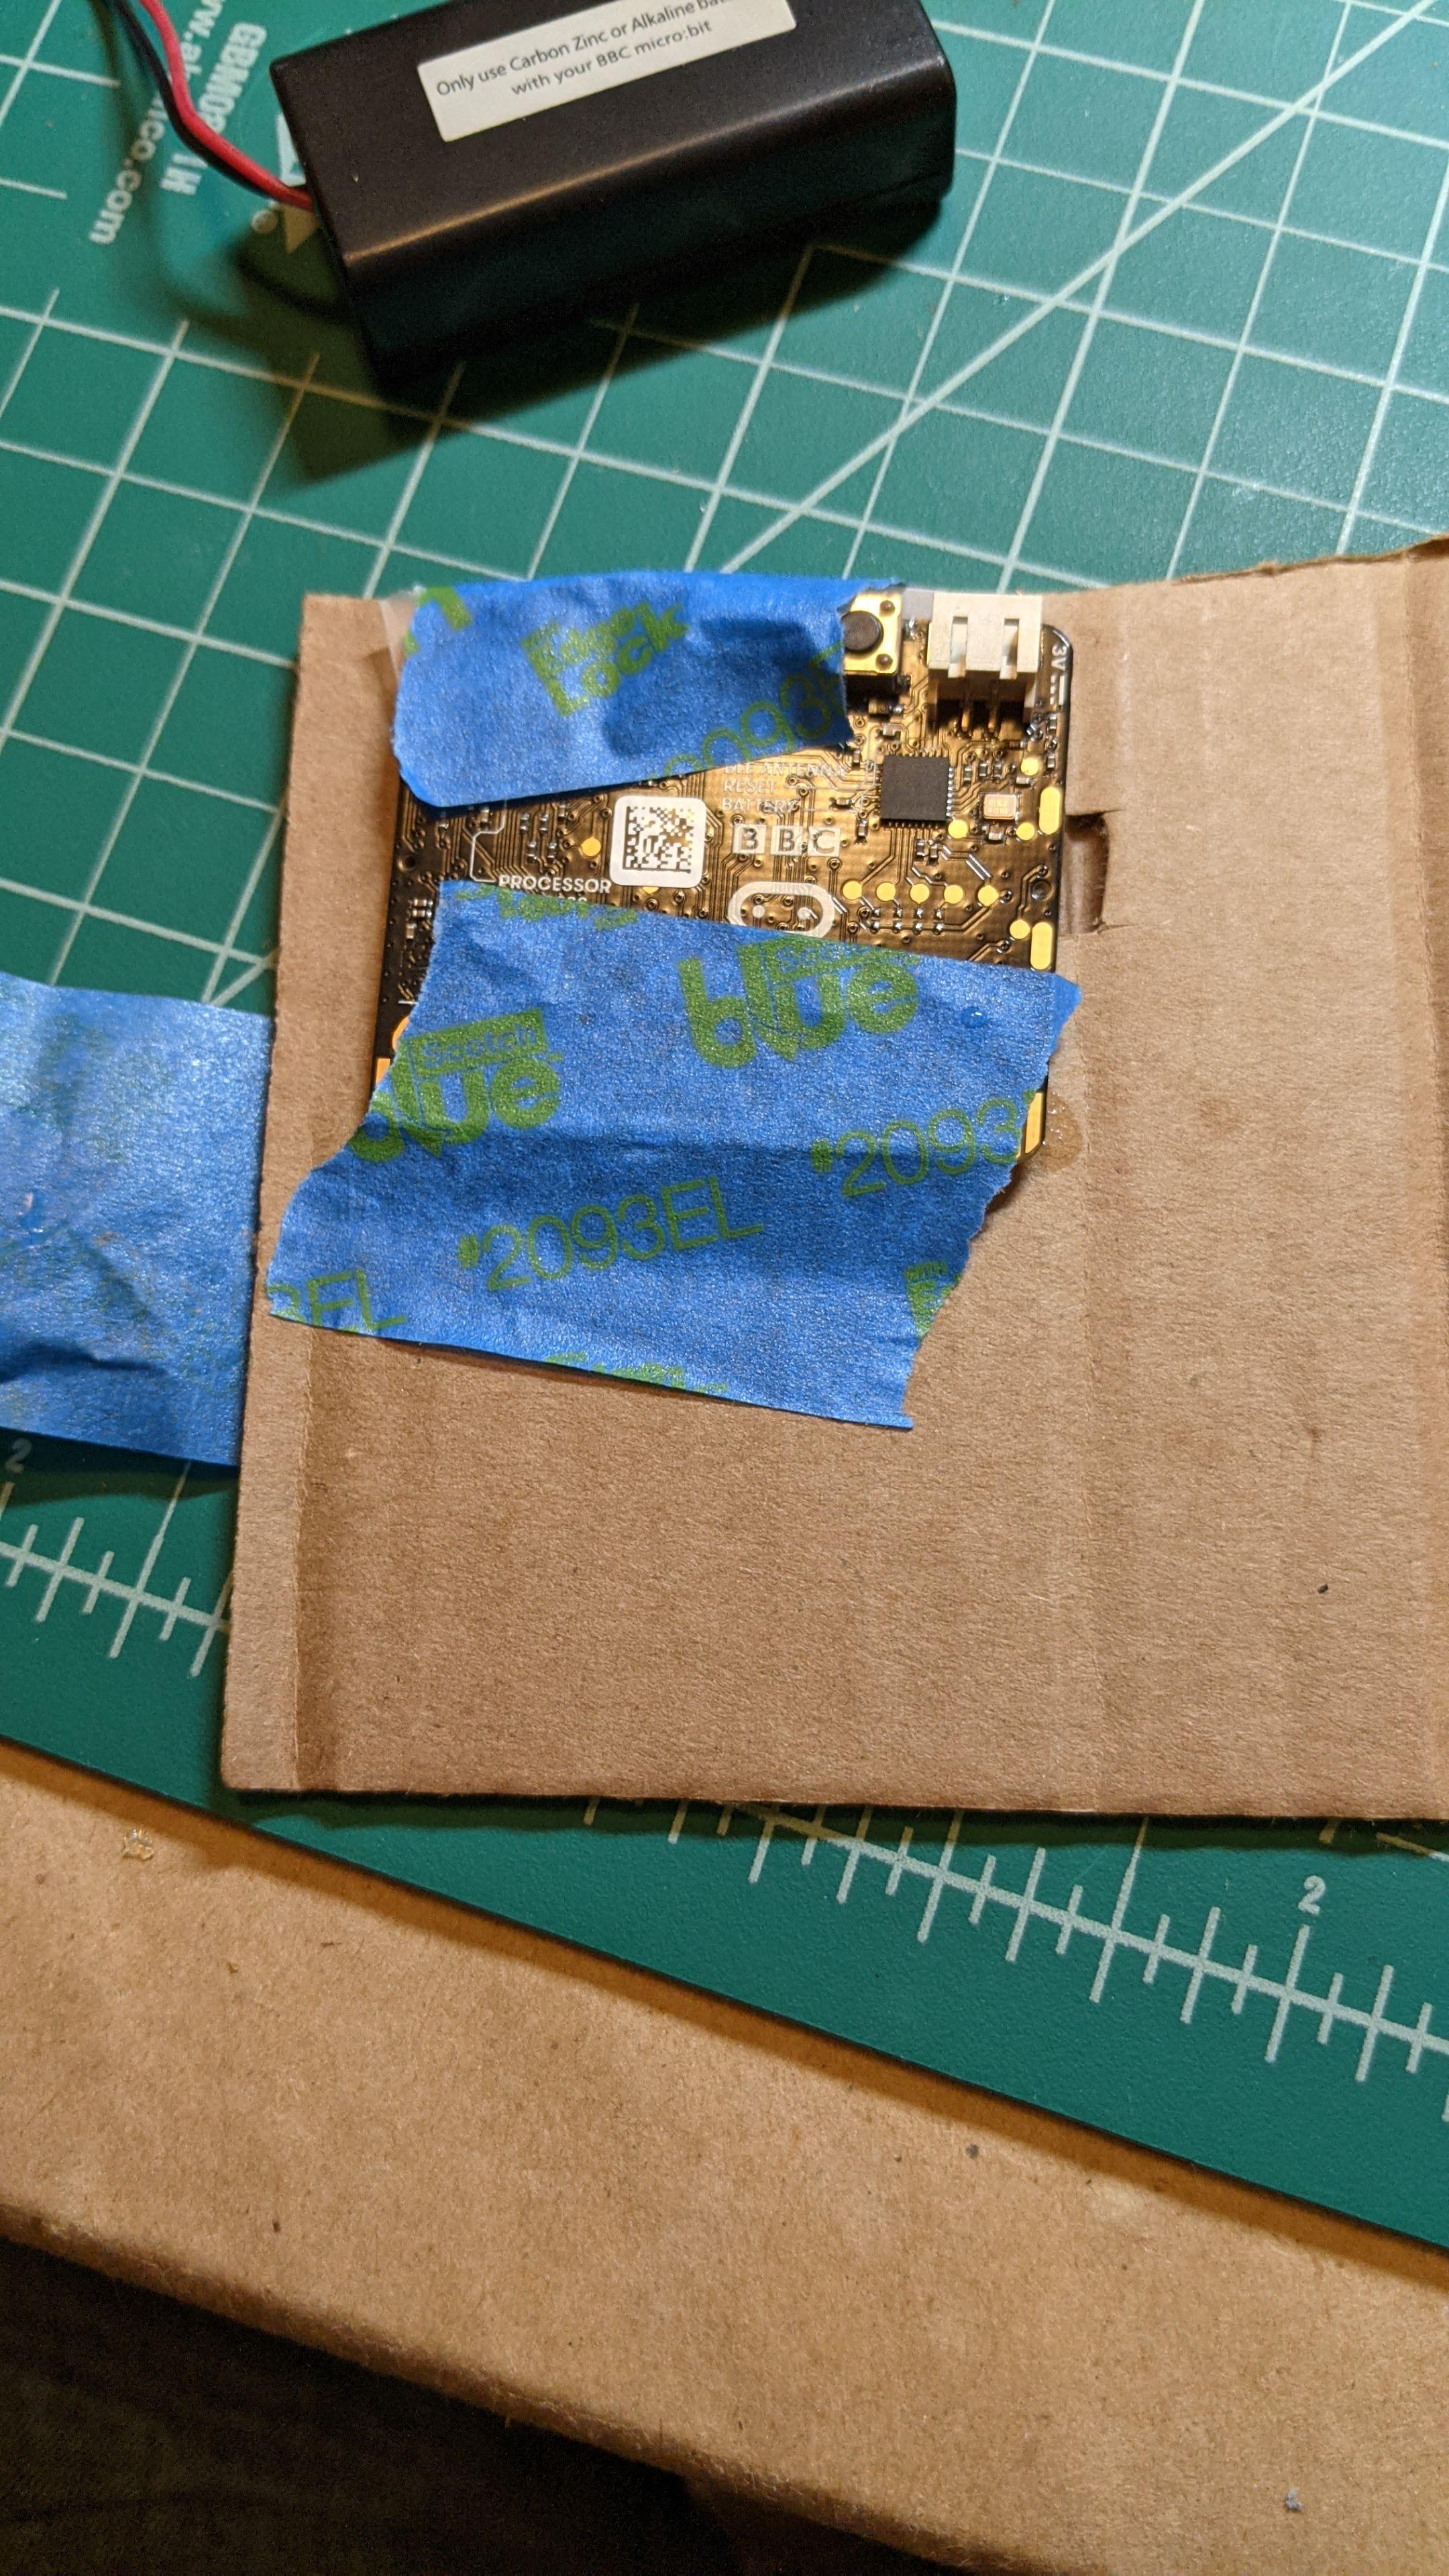 8 Tape Microbit to cardboard.jpg